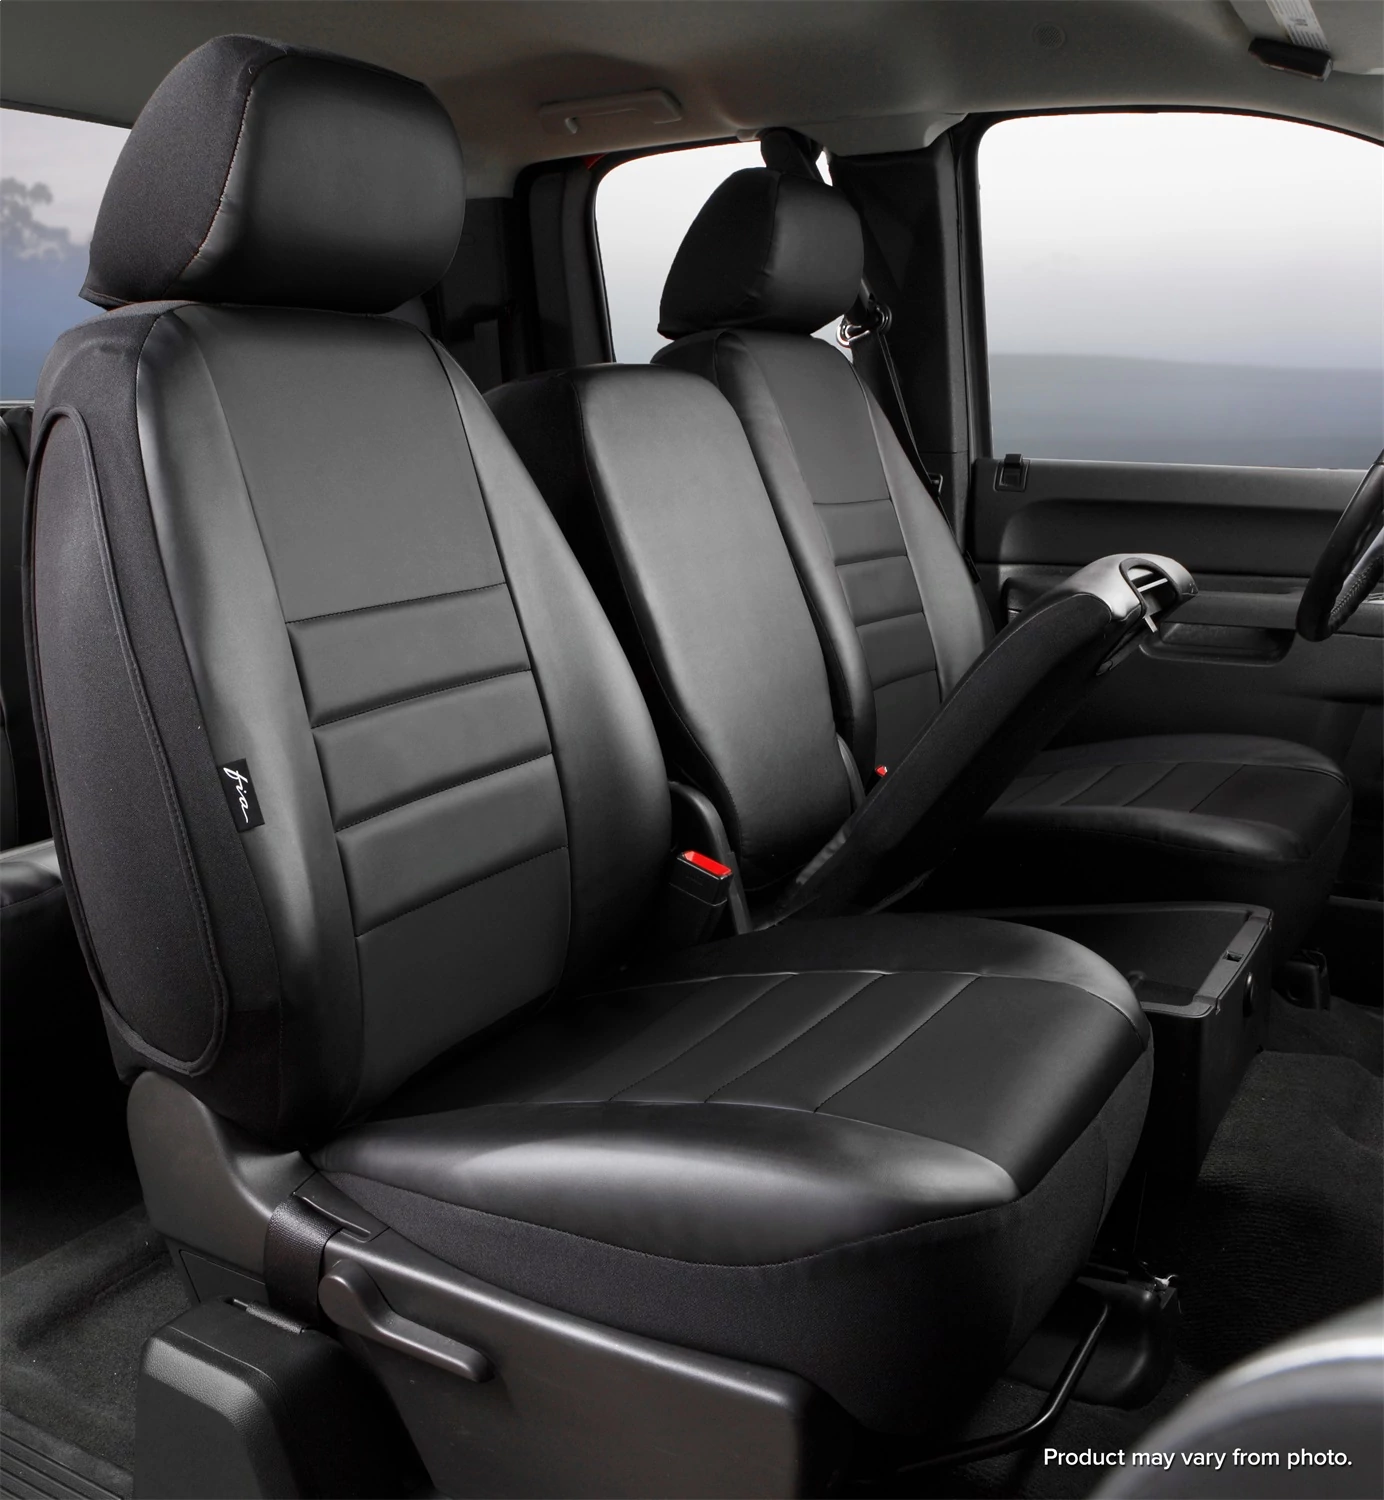 Fia SL69-11 BLK/BLK LeatherLite Custom Fit Seat Cover, for Seats with  Adjustable Headrests, Armrest/Storage, Cushion Storage TruckGear